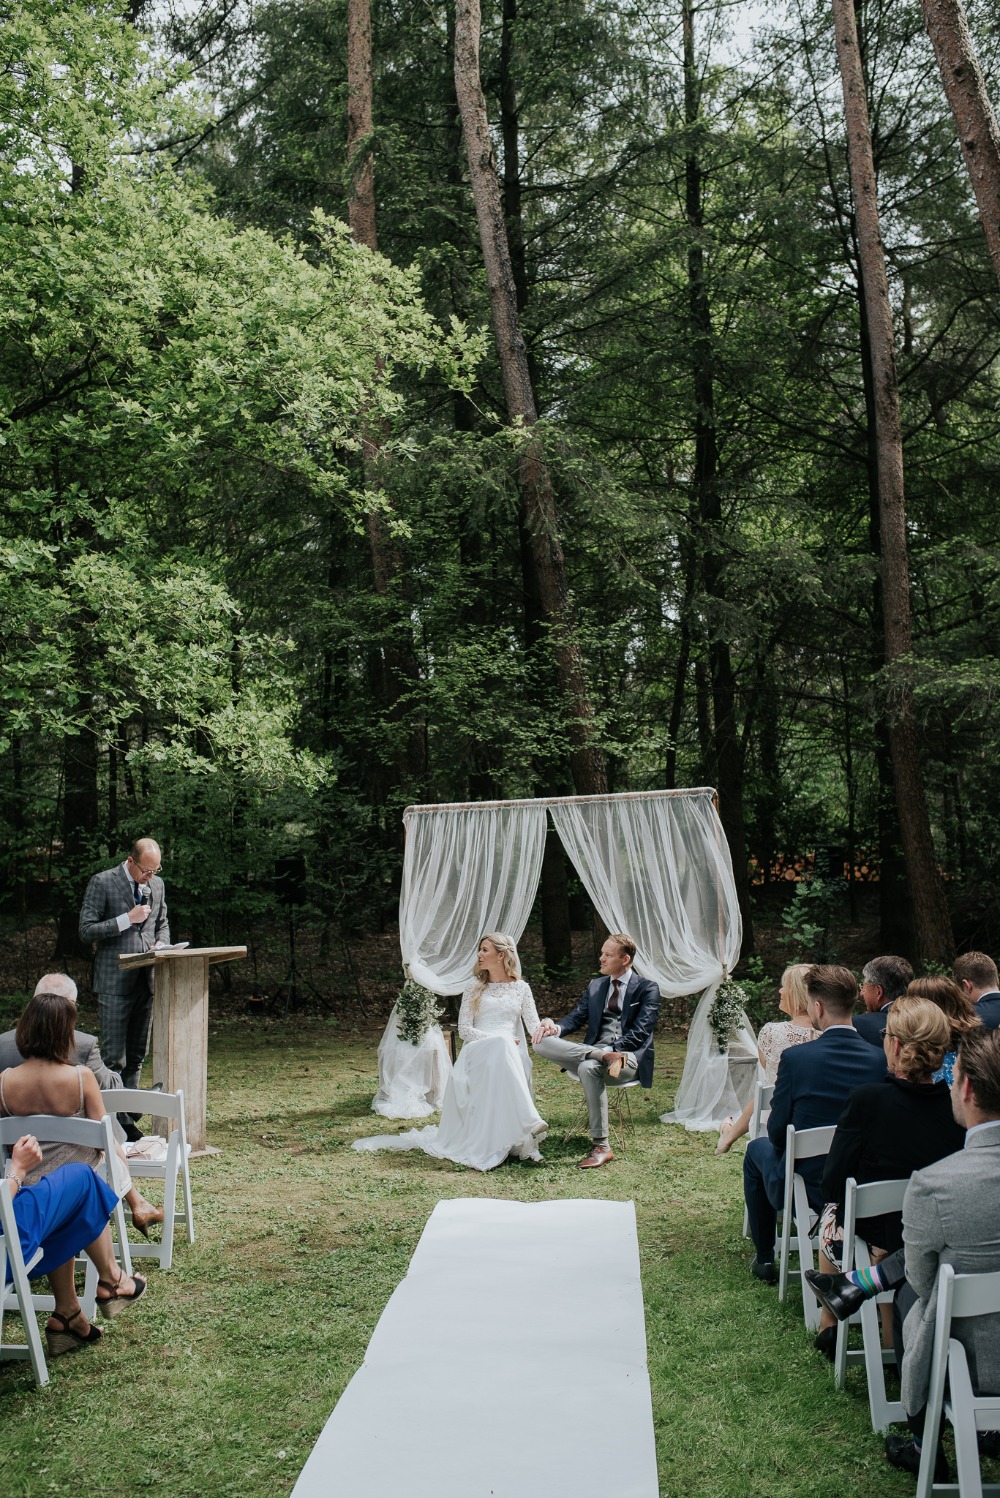 Elegant and simple wedding ceremony